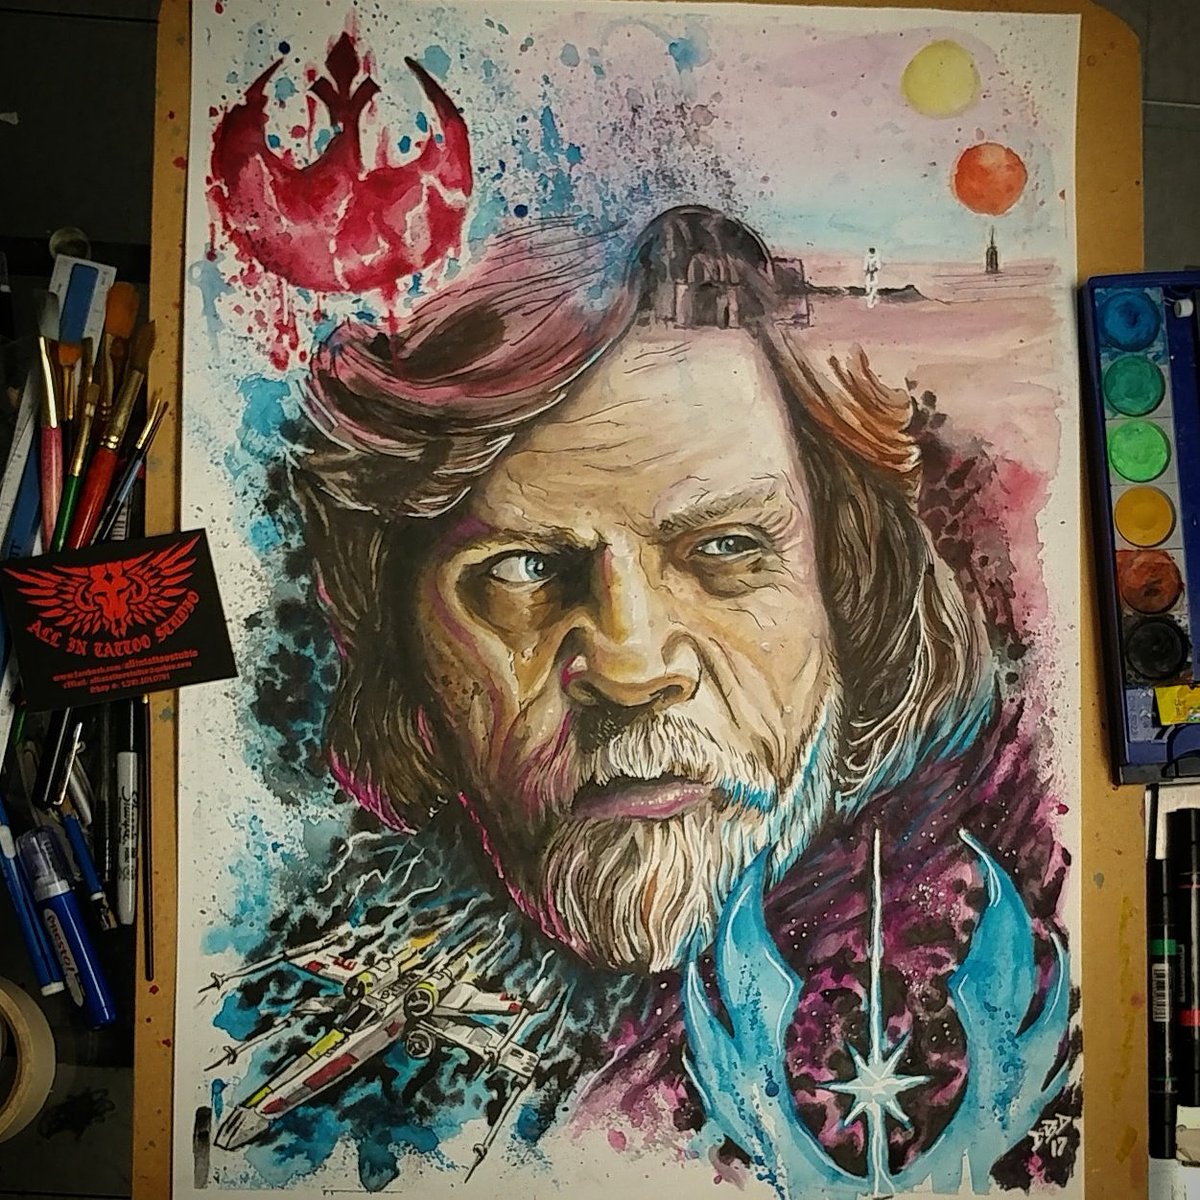 Painting I did of Old Luke Skywalker I call 'Farmer, Rebel, Hero, Jedi...' @HamillHimself #MayThe4thBeWithYou 
#watercolor #portraitpainting #StarWars #sanantonioartists